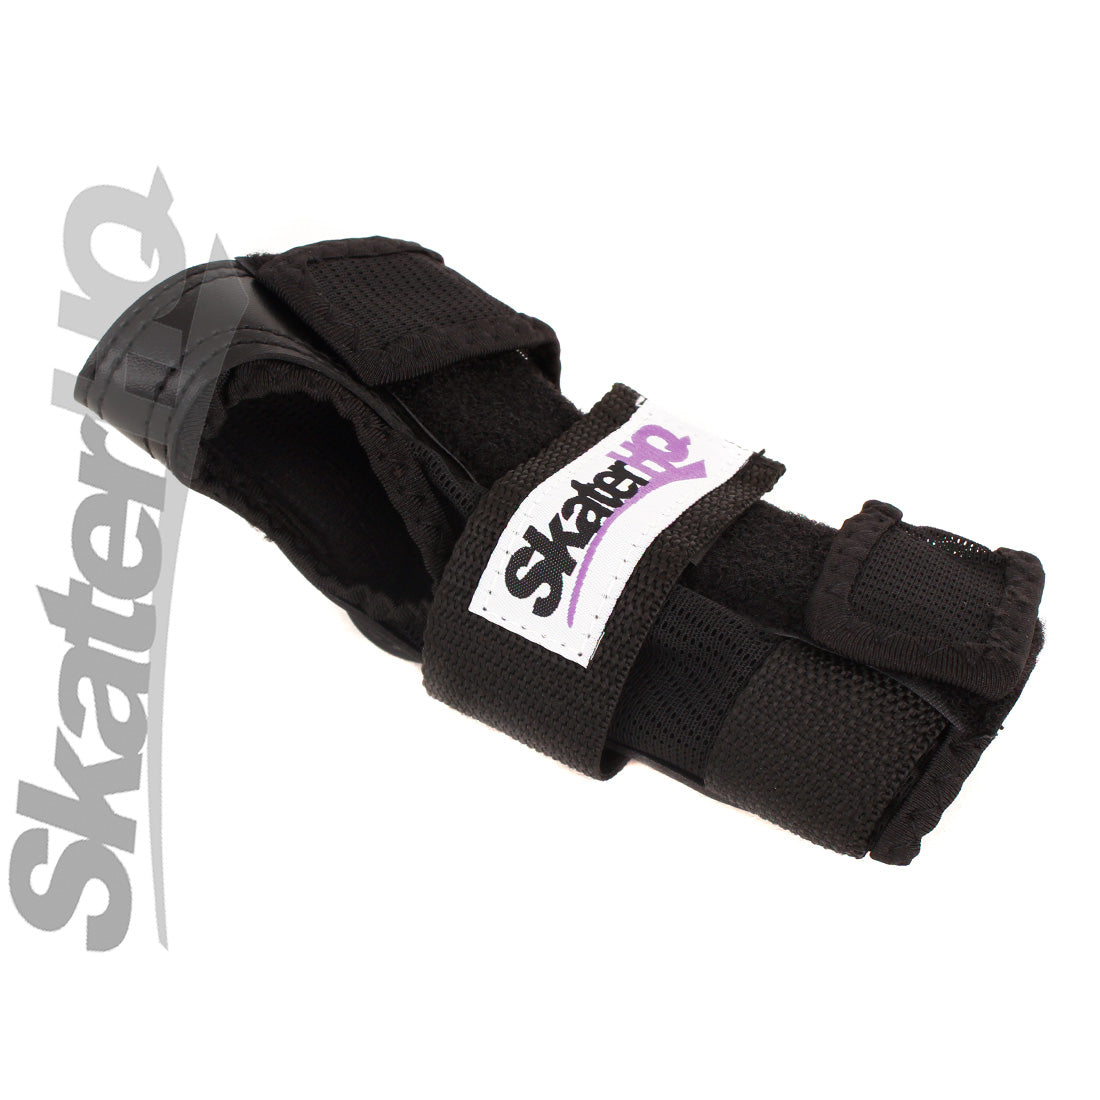 Skater HQ Wrist Guard - Medium Protective Gear